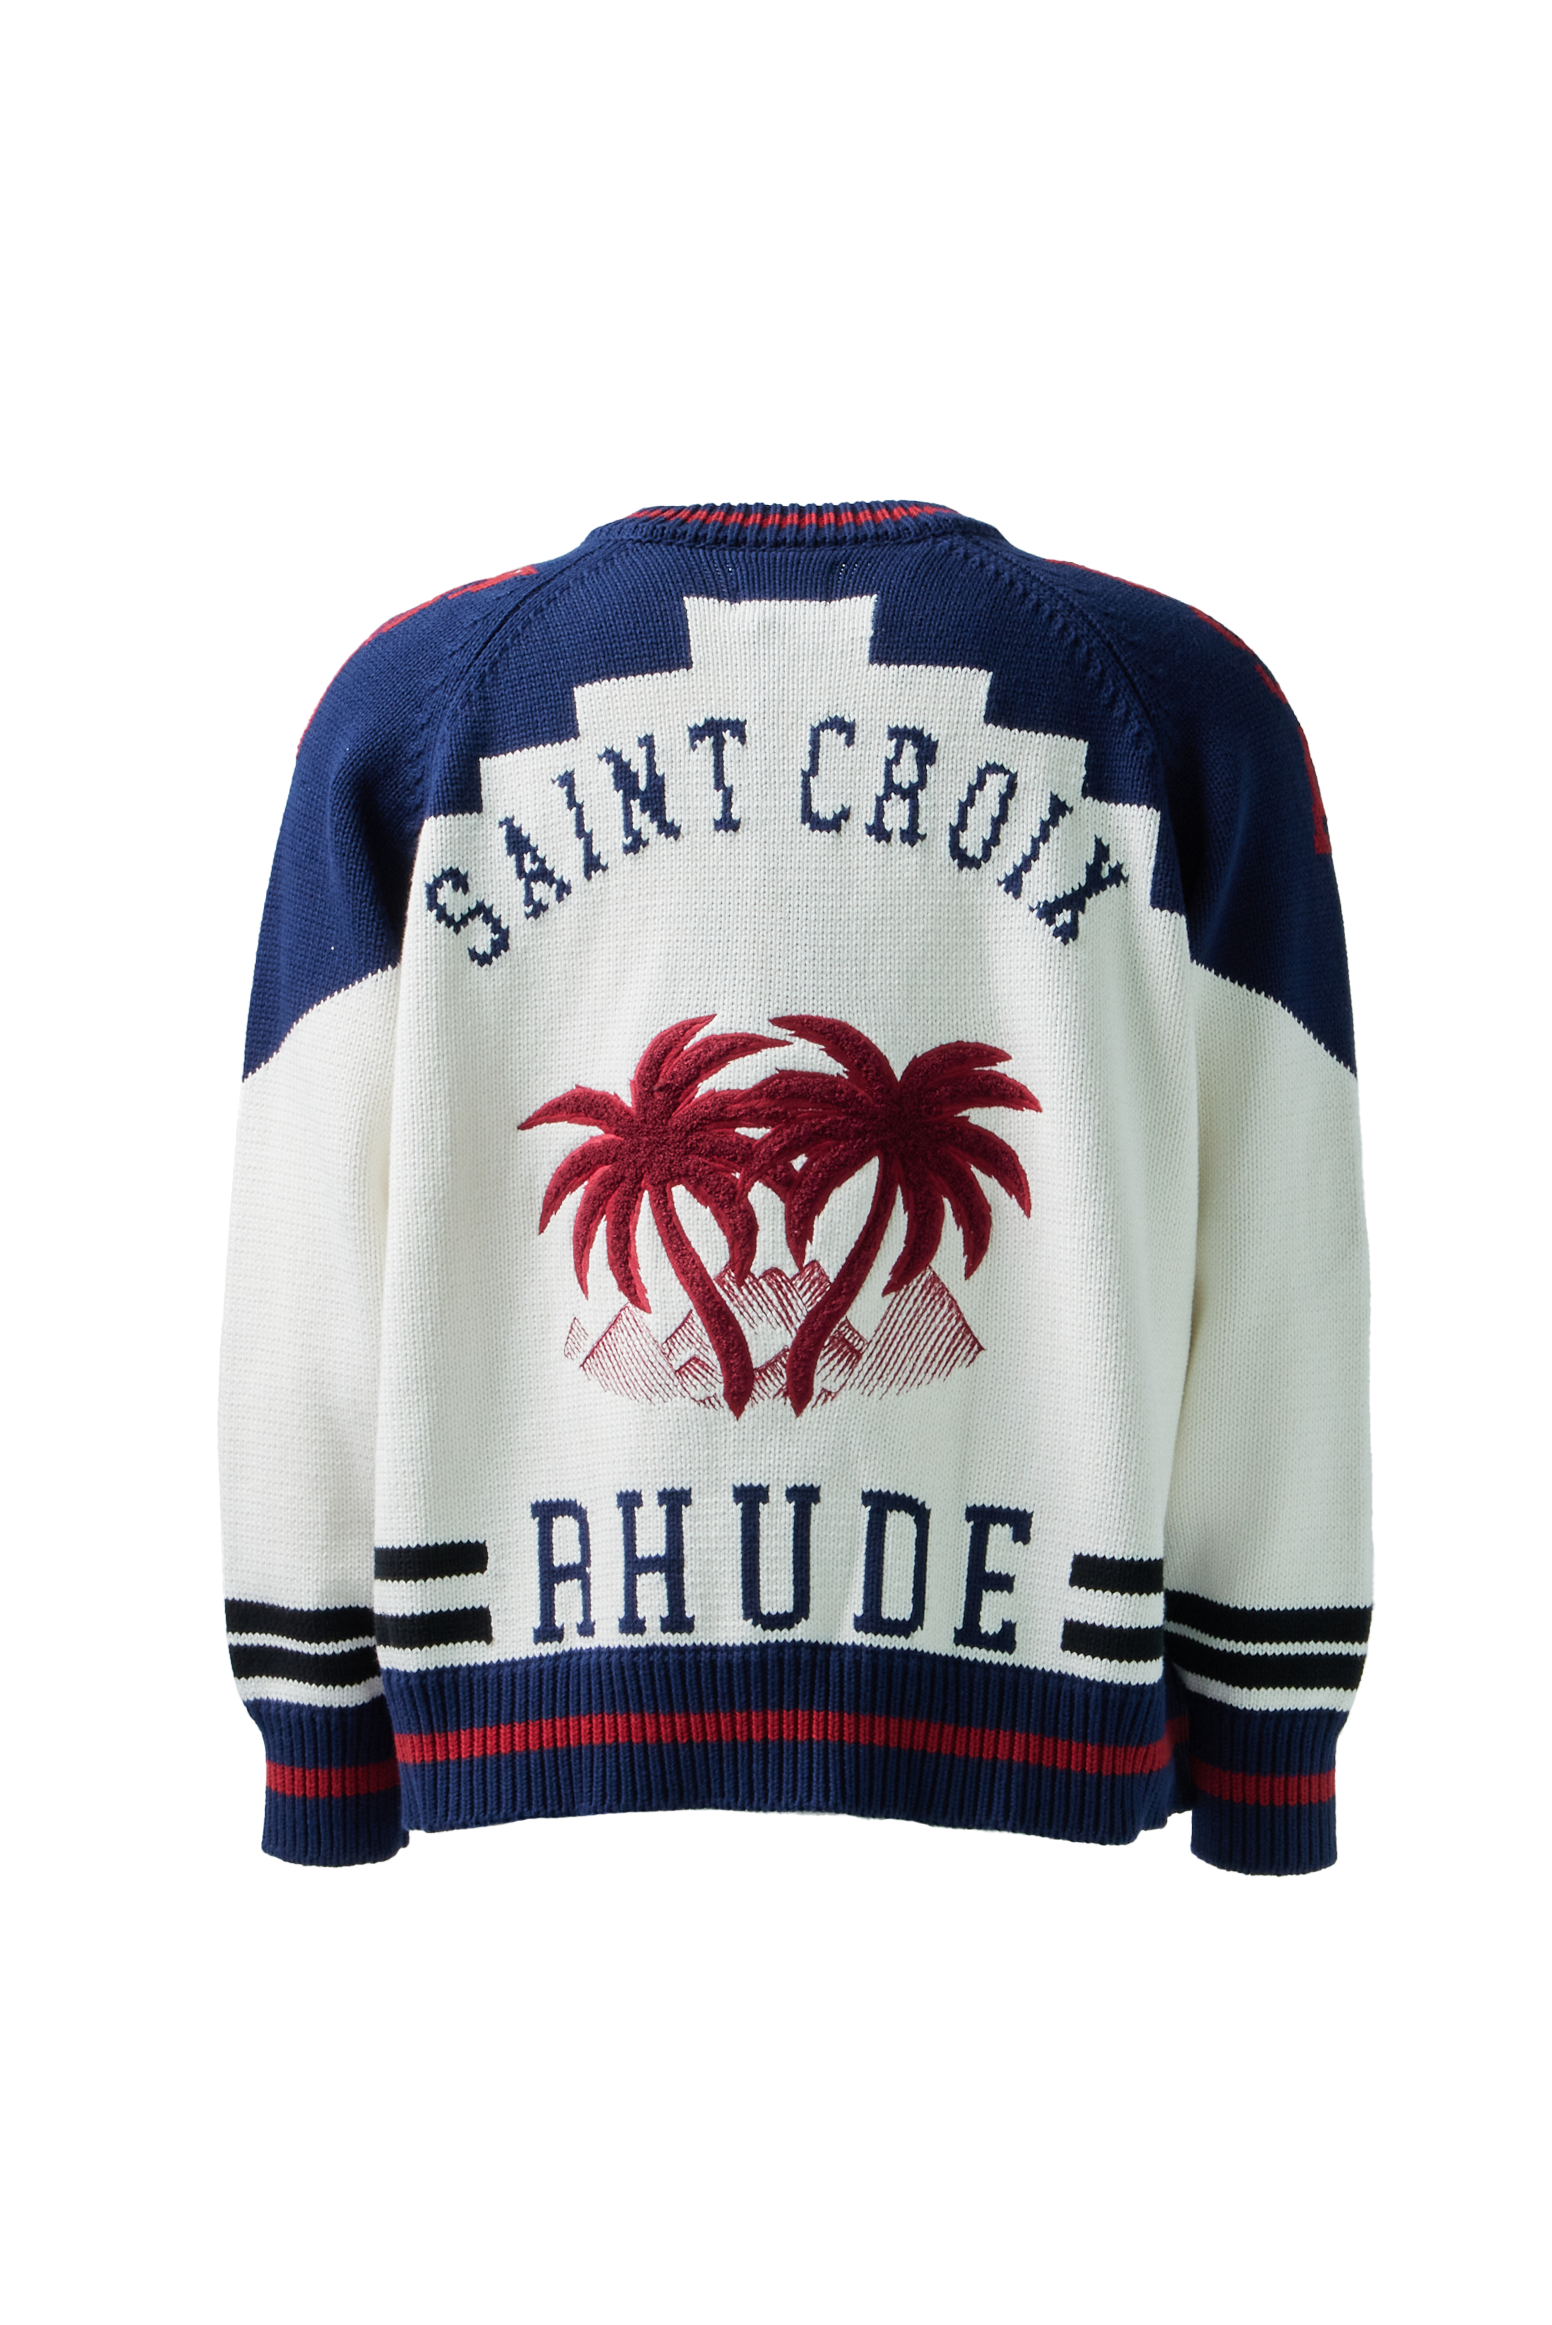 RHUDE - St. Croix Knit Zip-Up product image